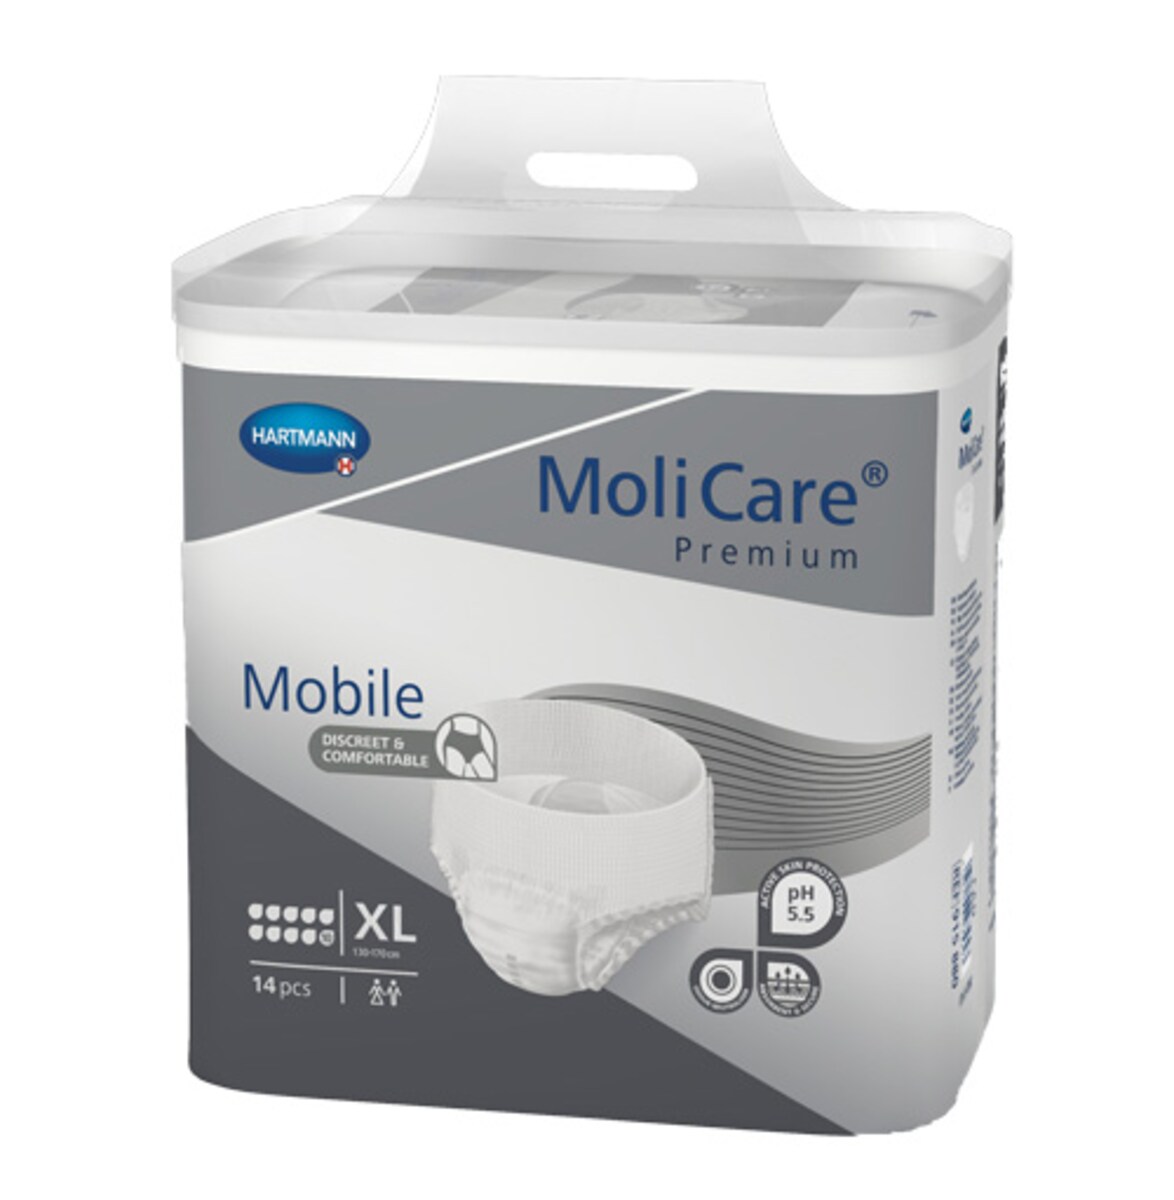 MoliCare Premium Mobile 10 Drop Extra Large 14 Pack